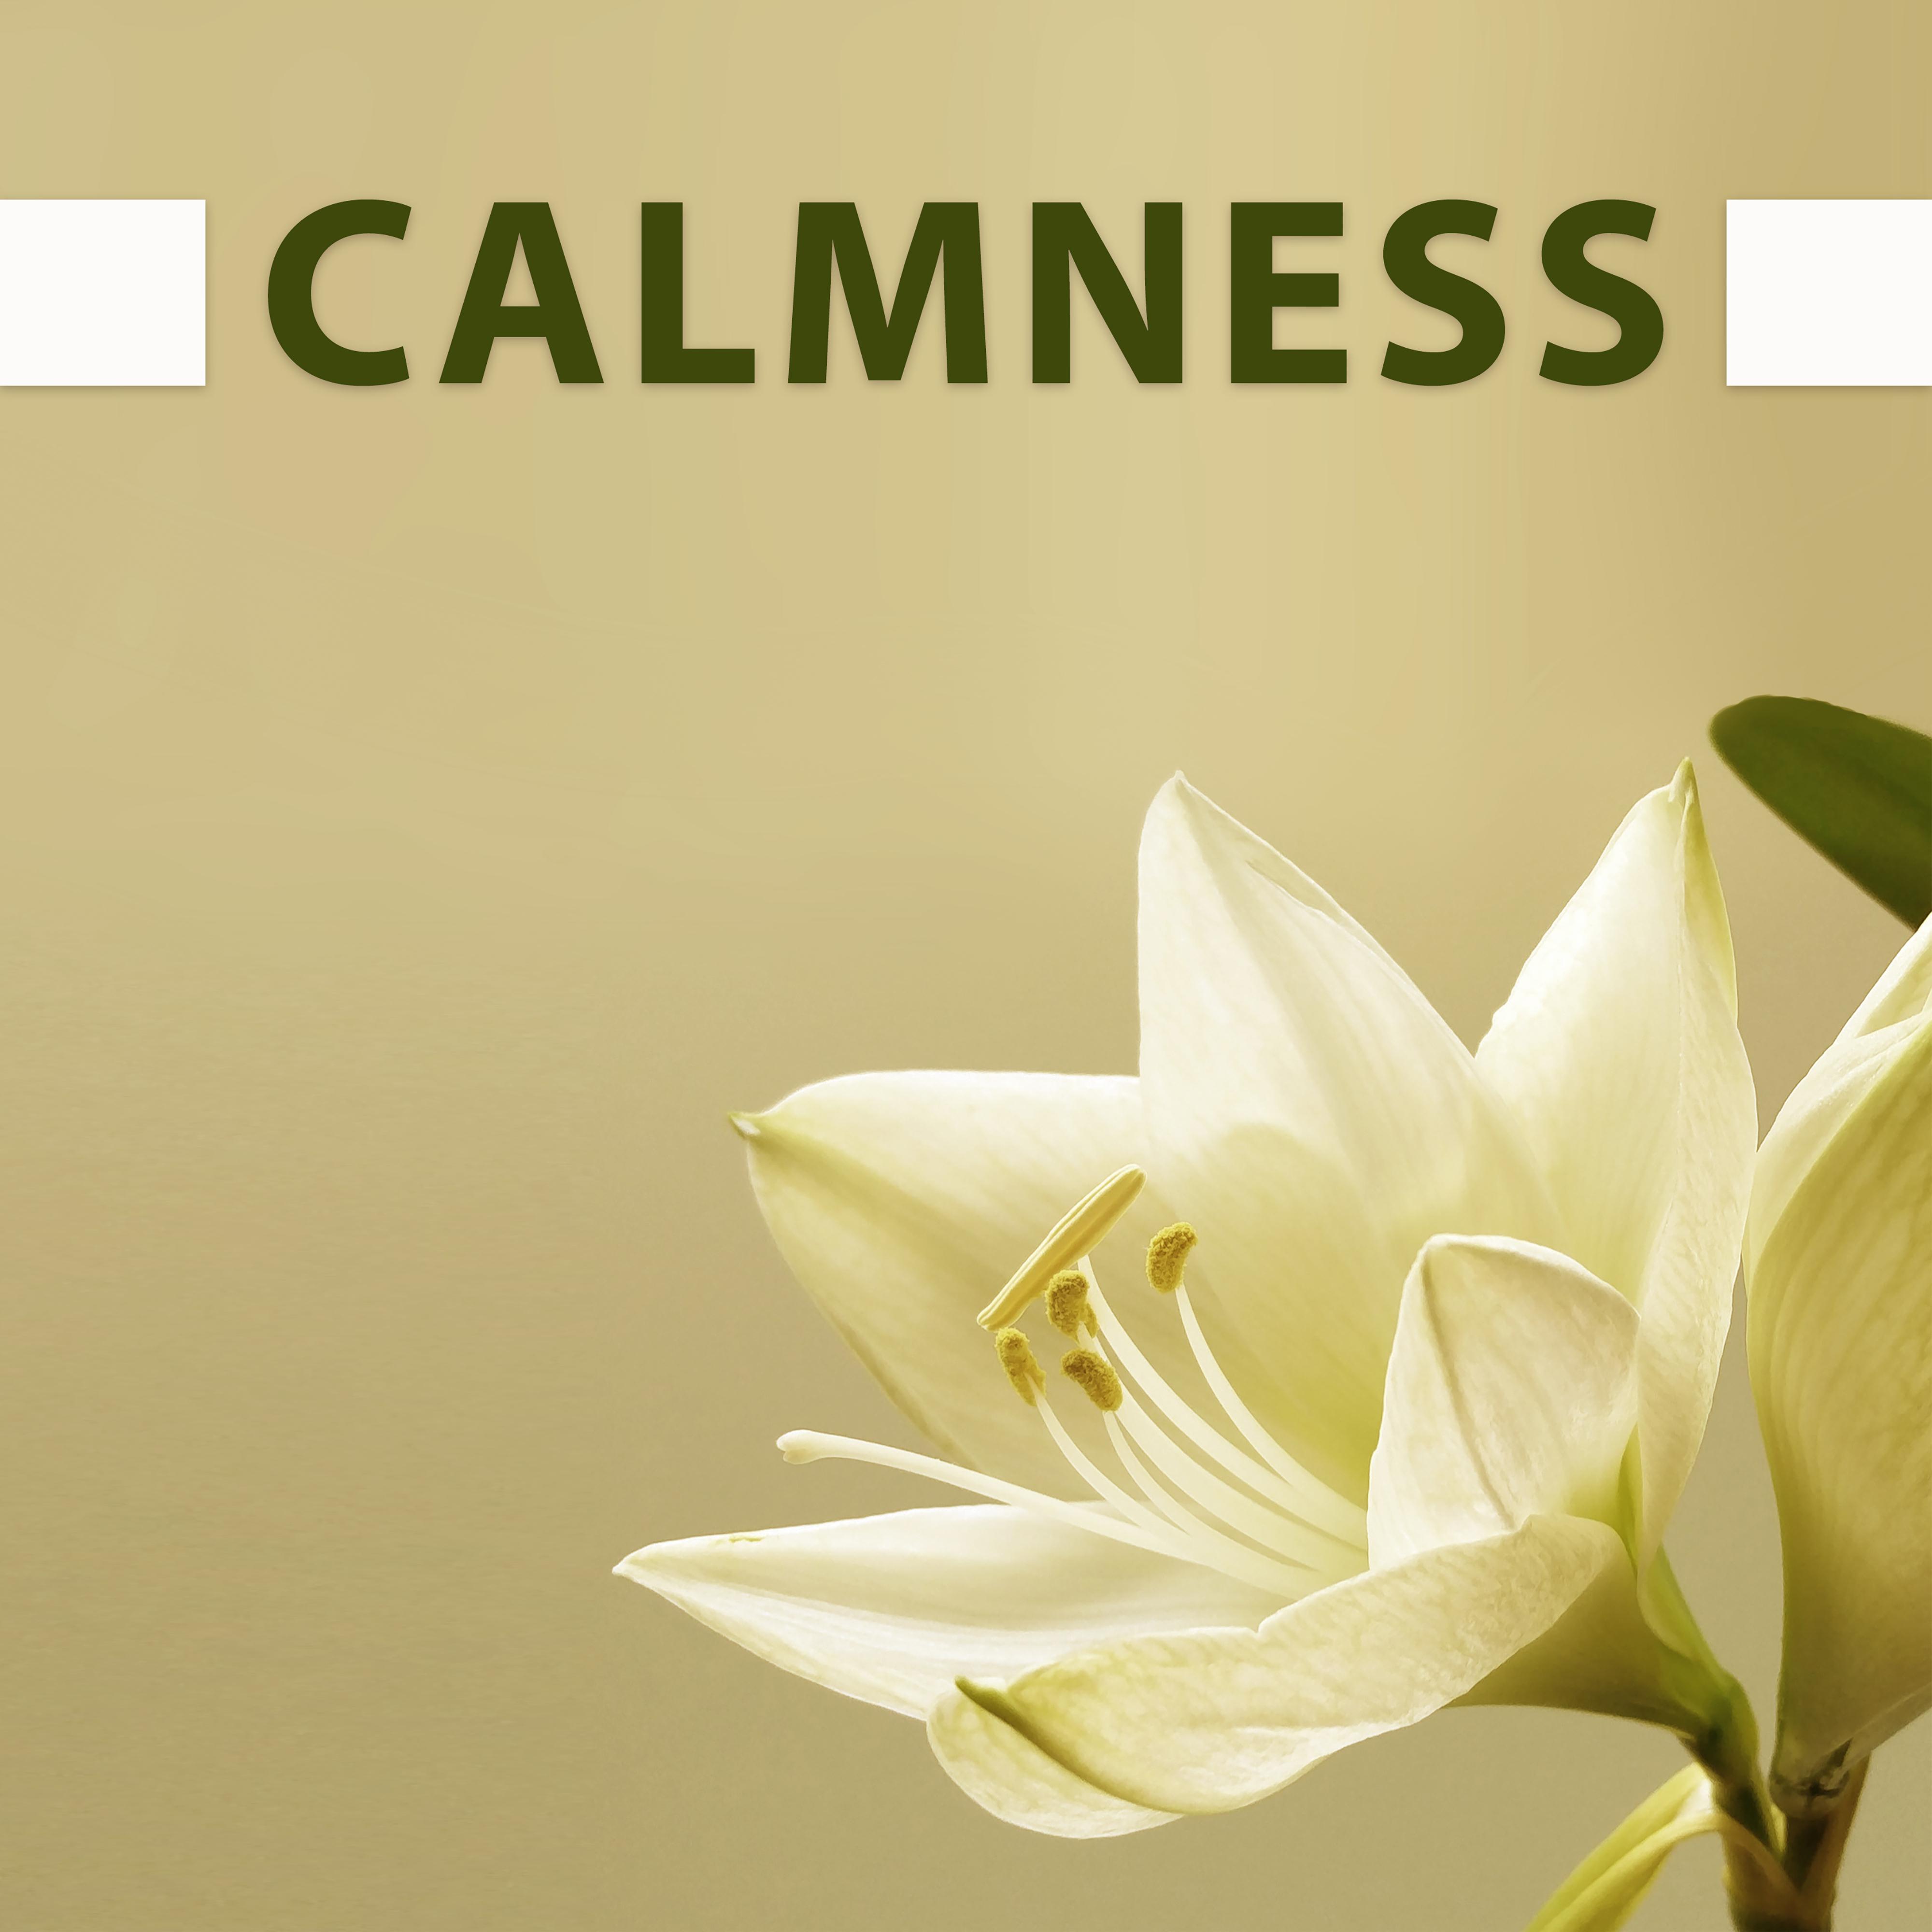 Calmness – Relaxing Music, Sounds of Nature, Inner Meditation, Deep Relaxation, Blissful